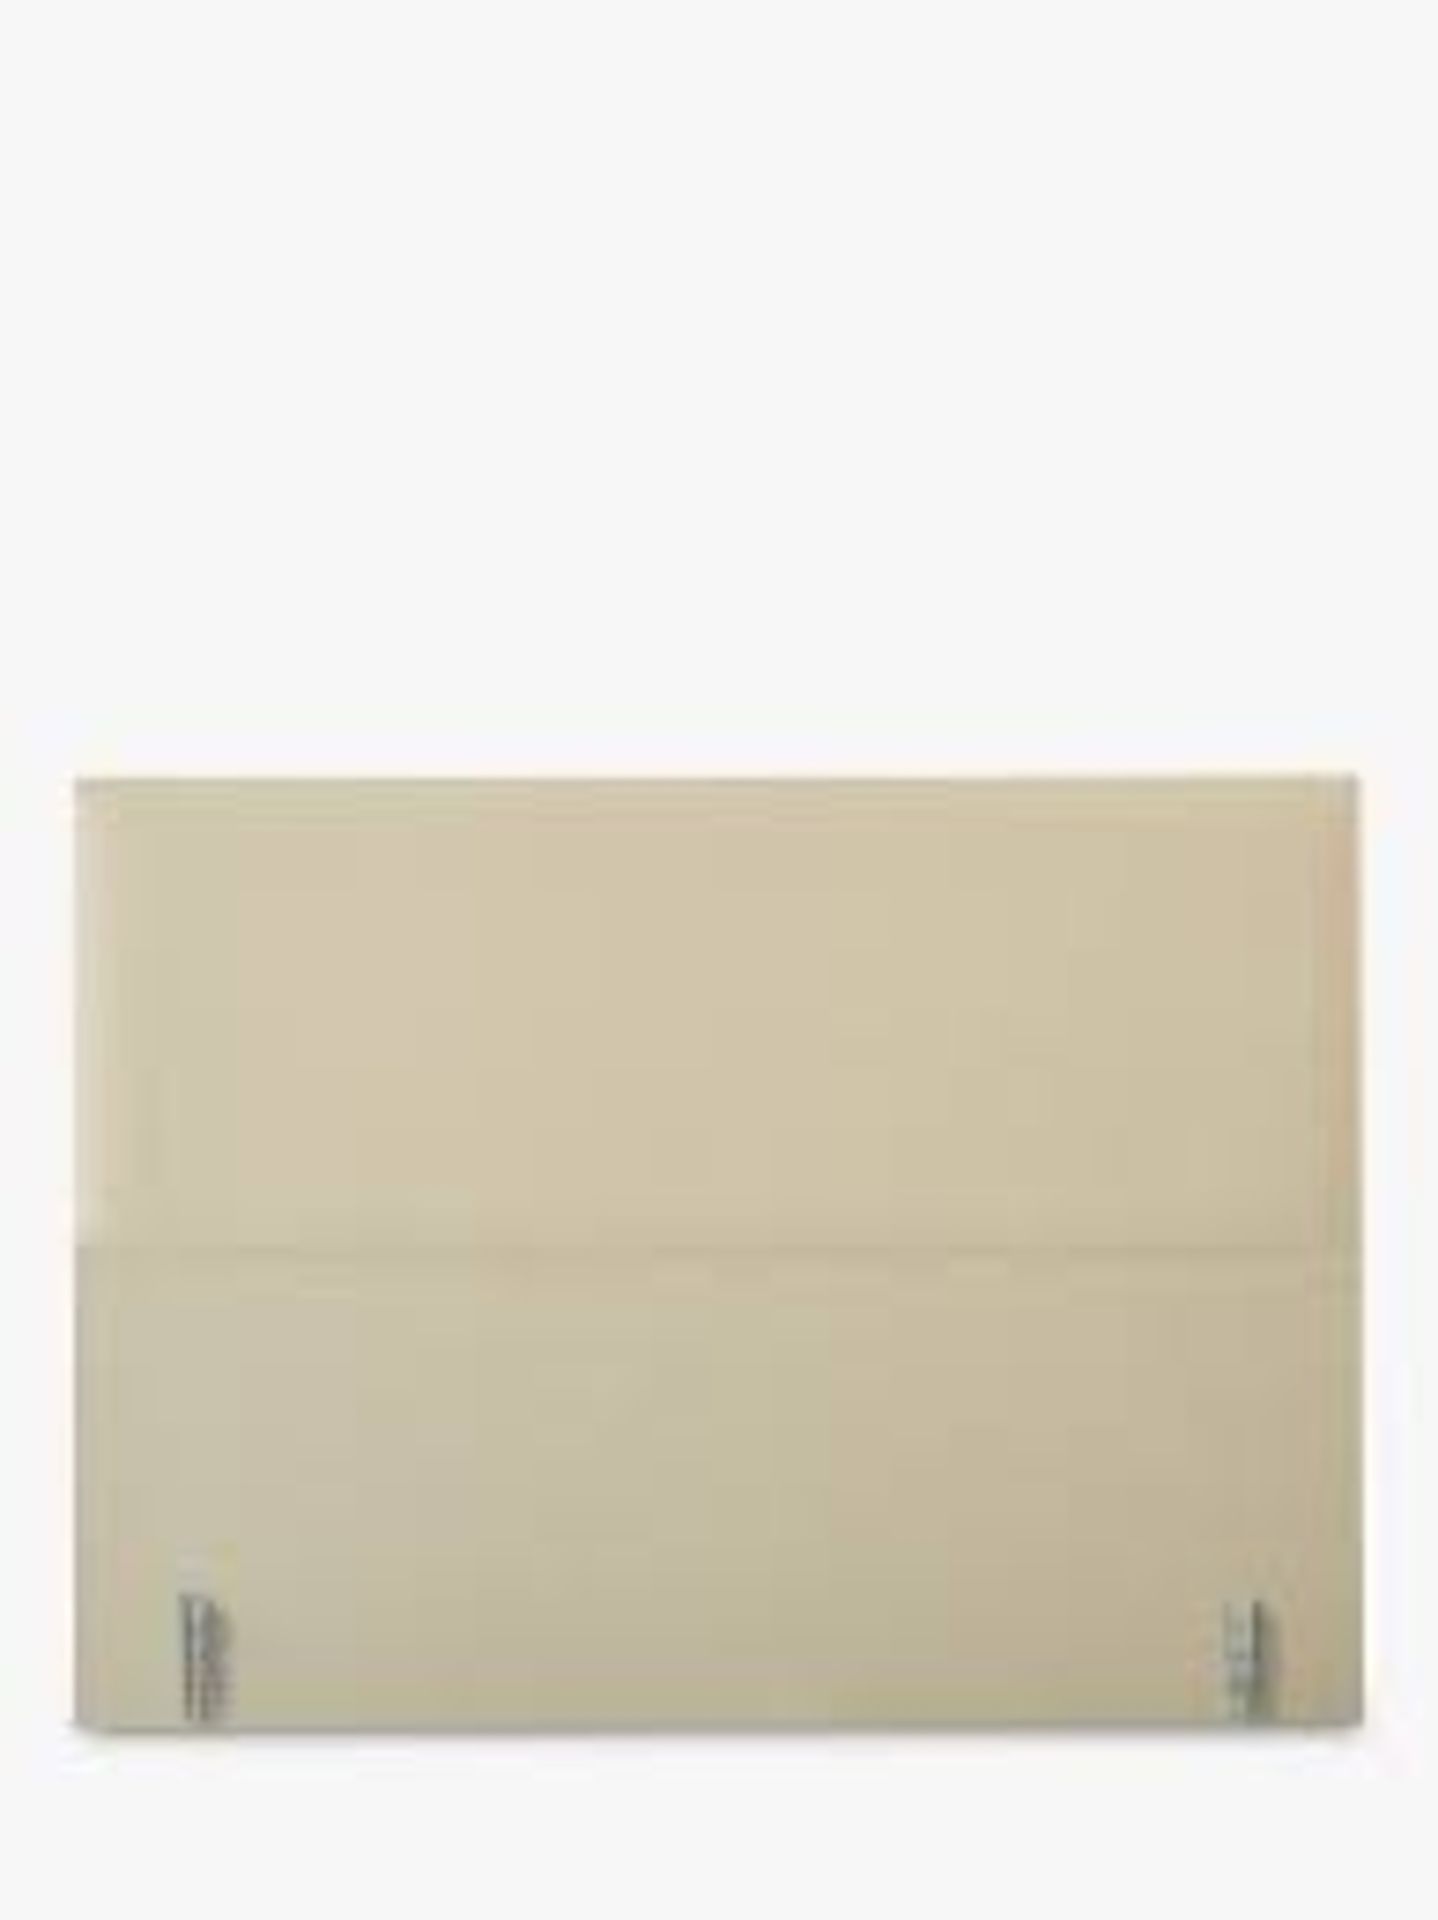 RRP £950 Packaged Vispring Hebe Full Depth Upholstered Headboard, King Size, Gem Cream, (Grade A) (